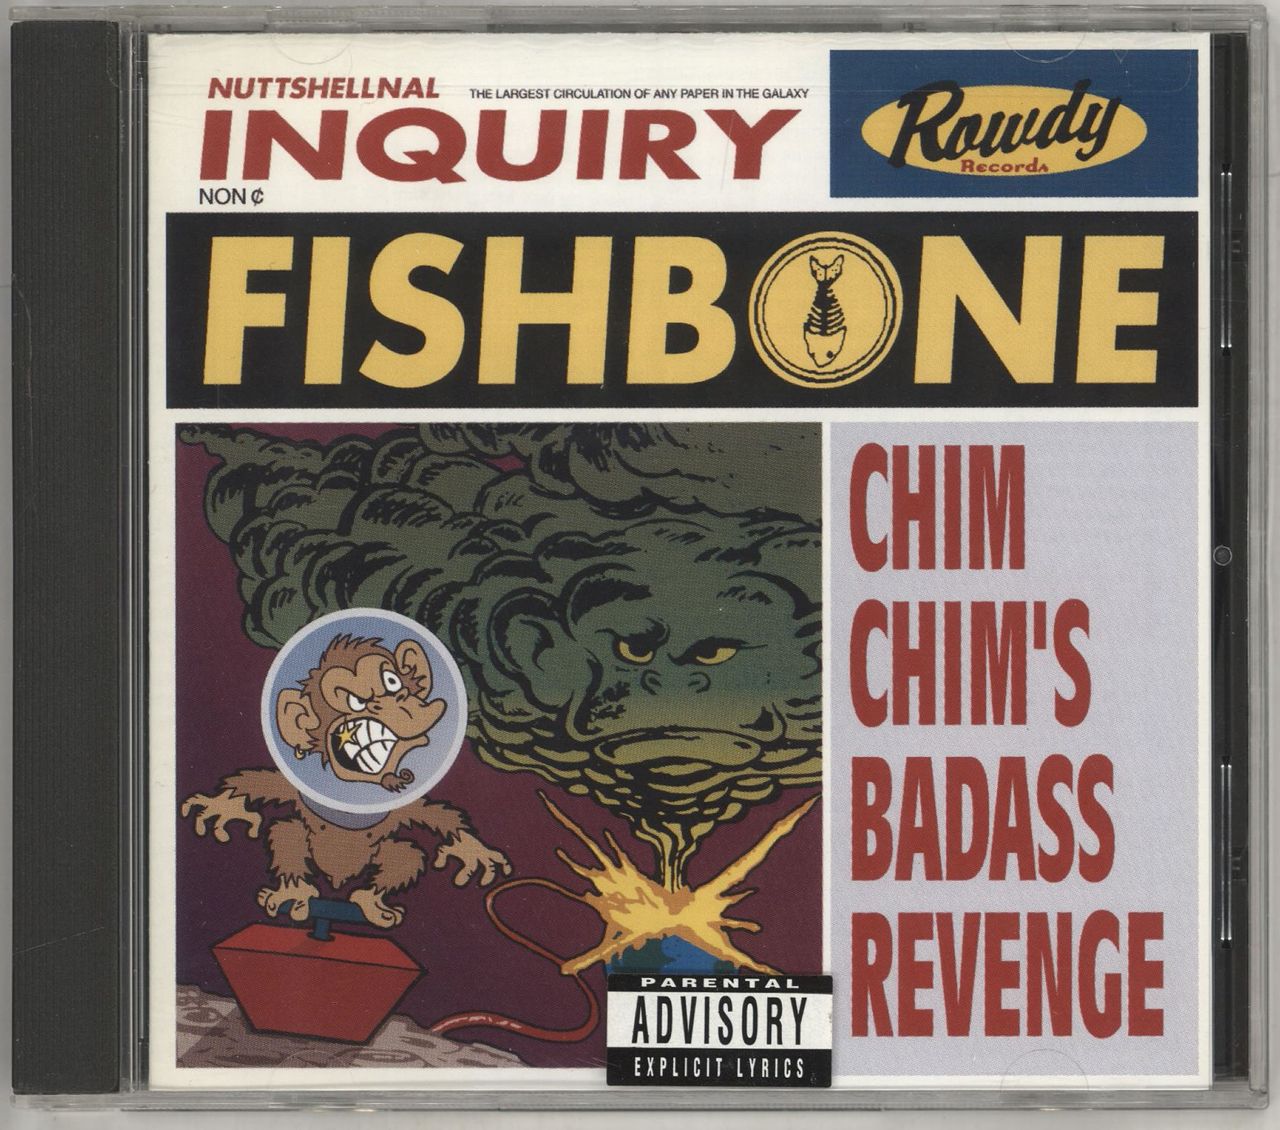 Fishbone Chim Chim's Badass Revenge UK Promo CD album — RareVinyl.com